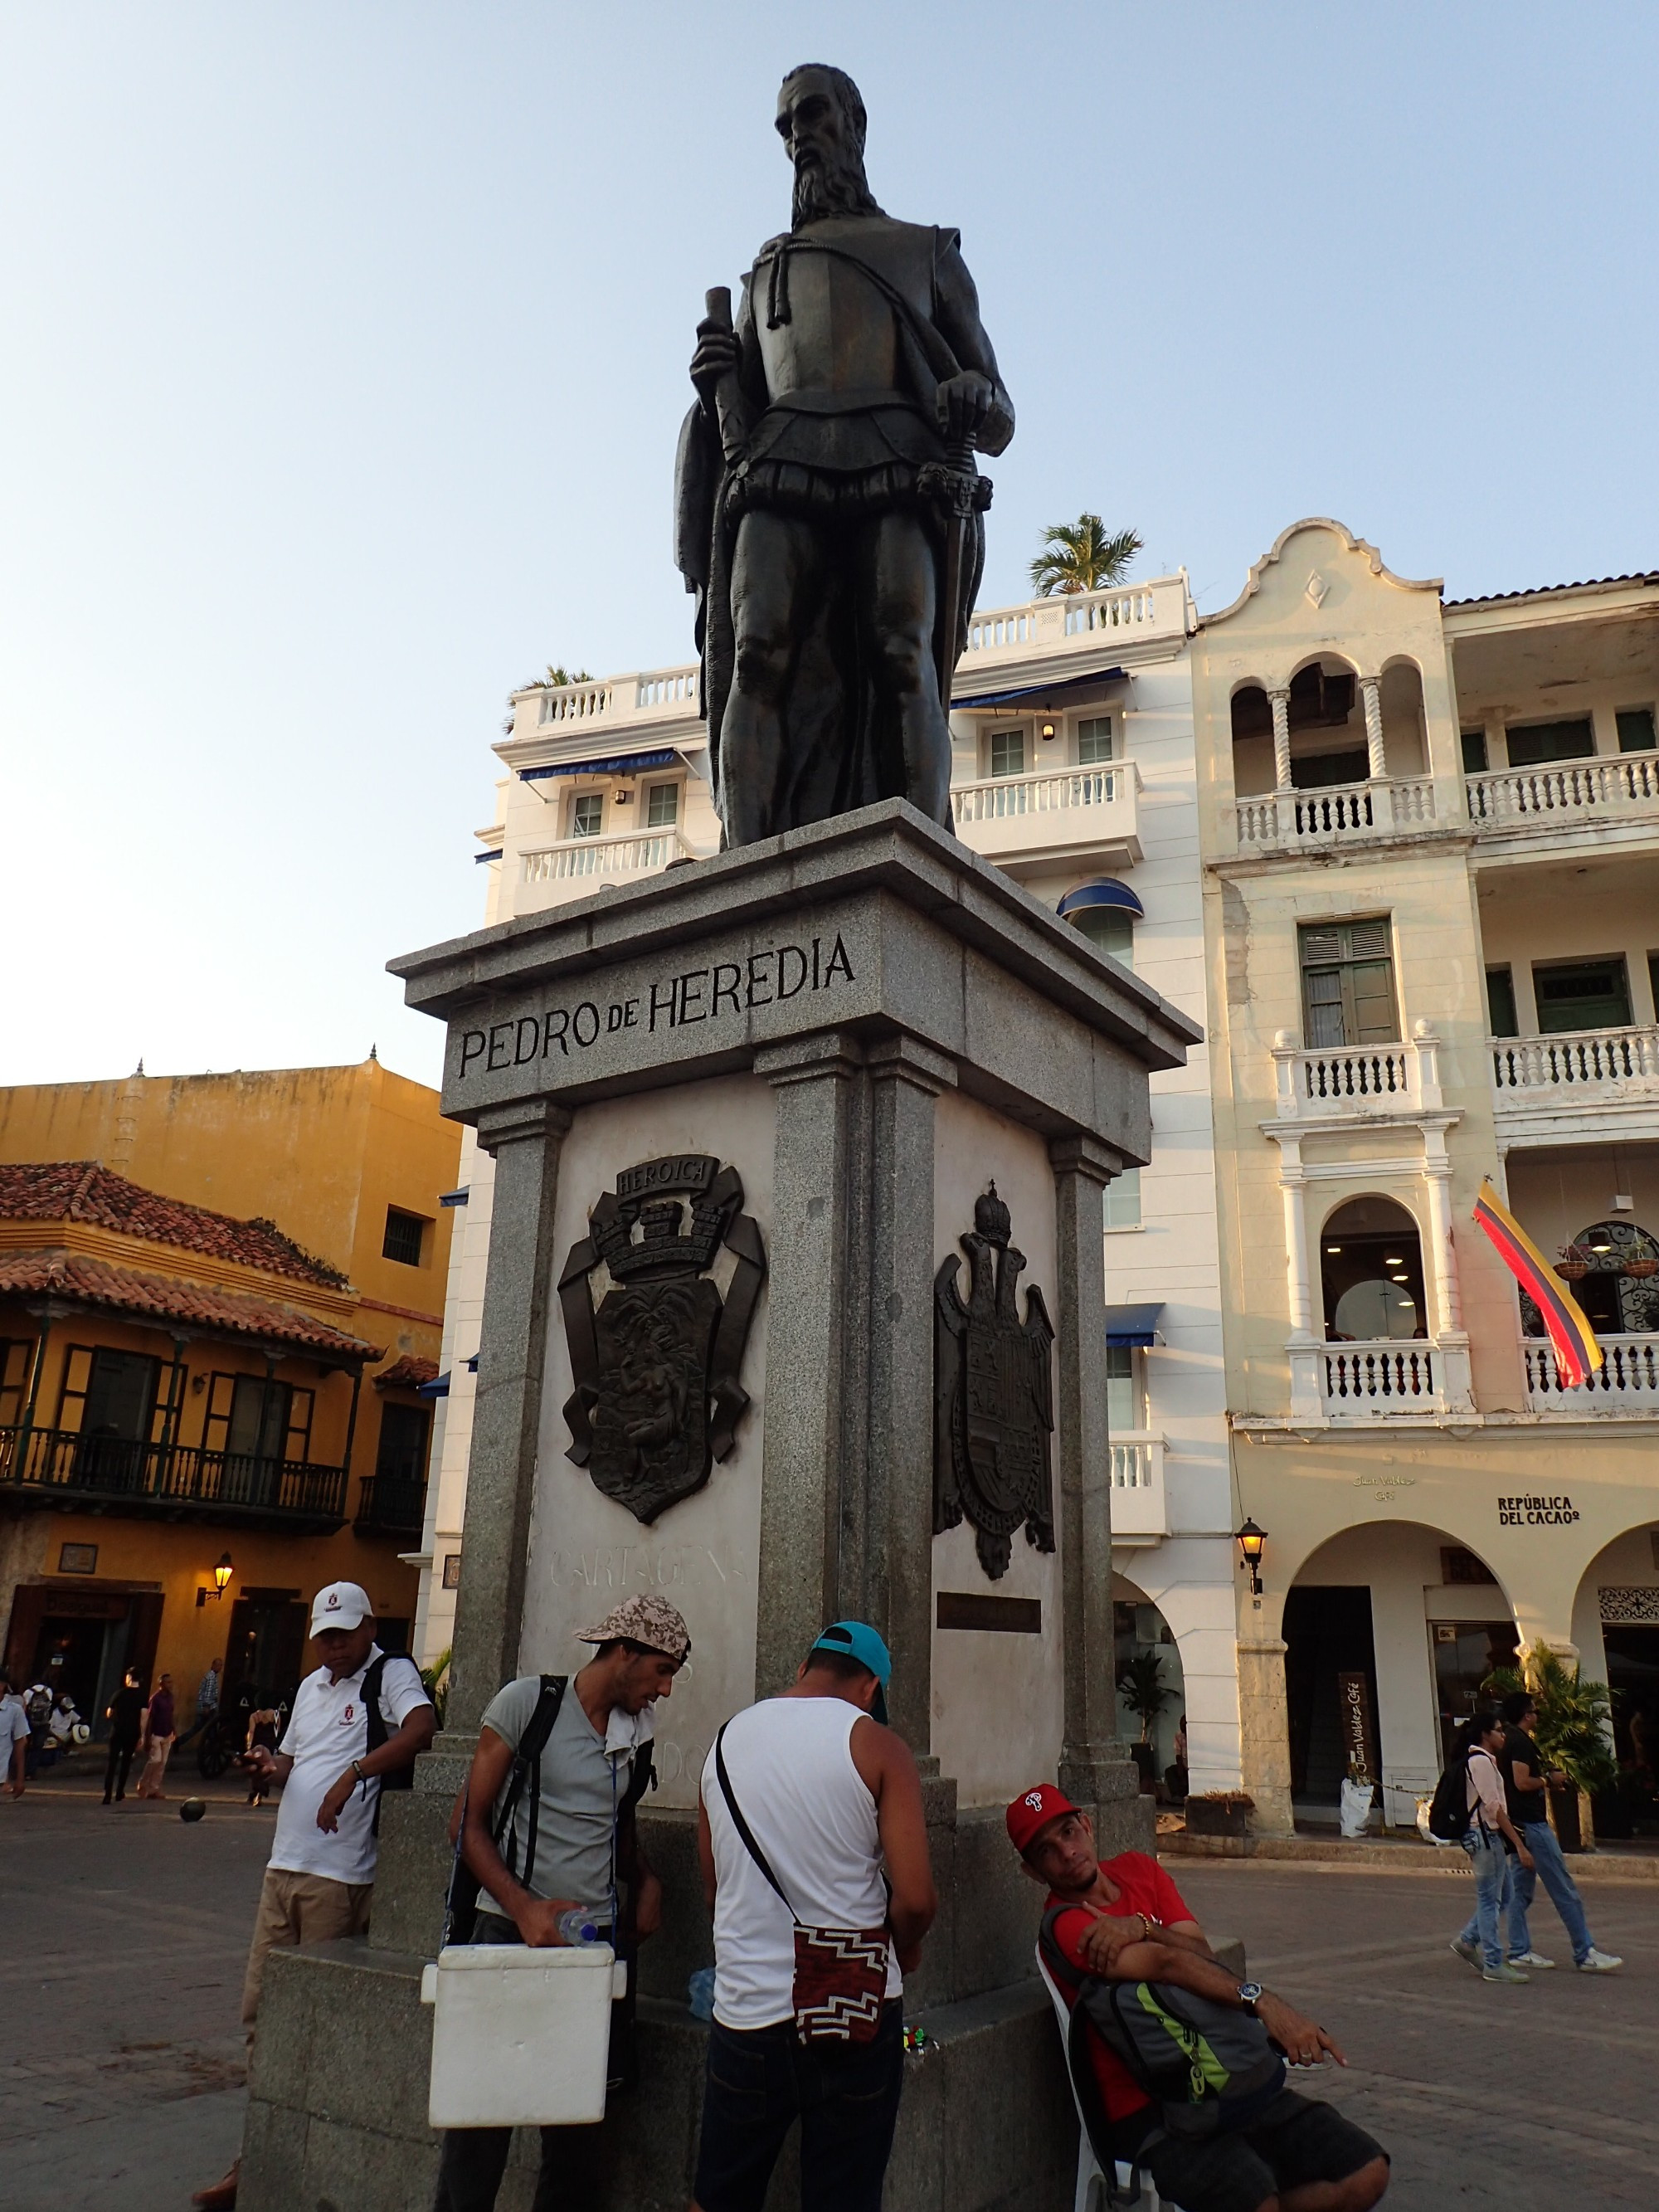 Pedro Heredia Statue, Colombia